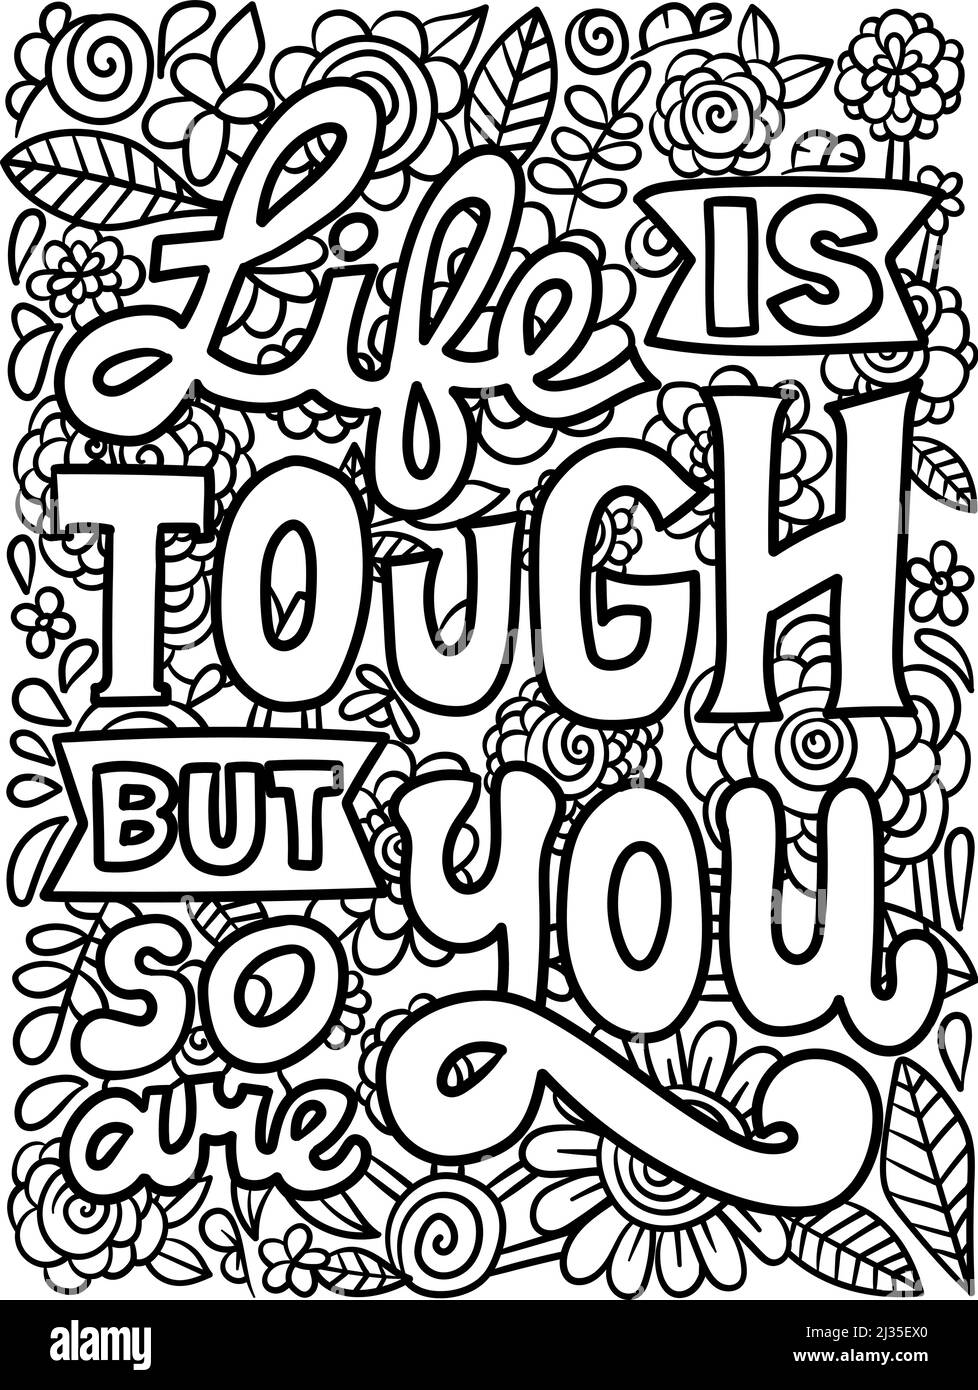 Life is Tough Motivational quote Coloring Page Illustrazione Vettoriale